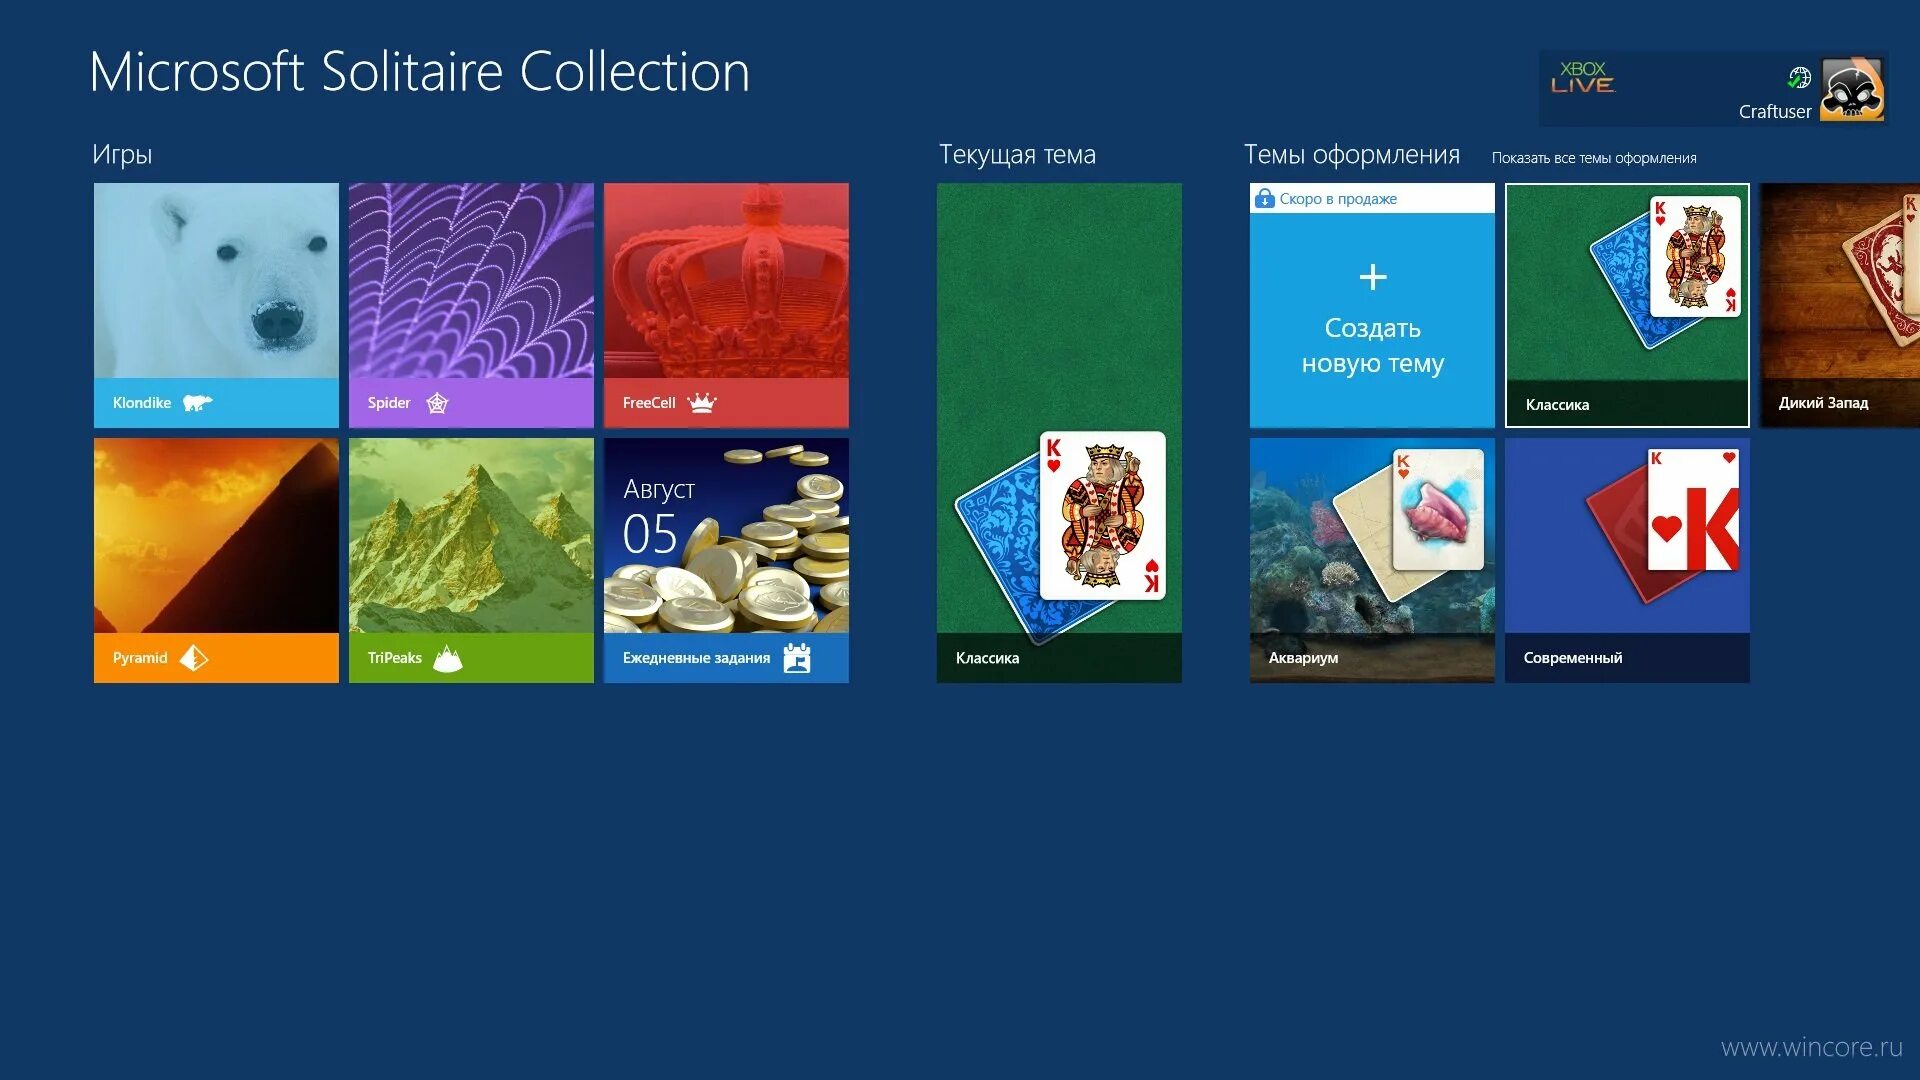 Игры Microsoft Solitaire collection. Microsoft Solitaire collection Windows 8 "без магазина". Microsoft Солитер коллекция. Солитер коллекшн. Windows solitaire collection